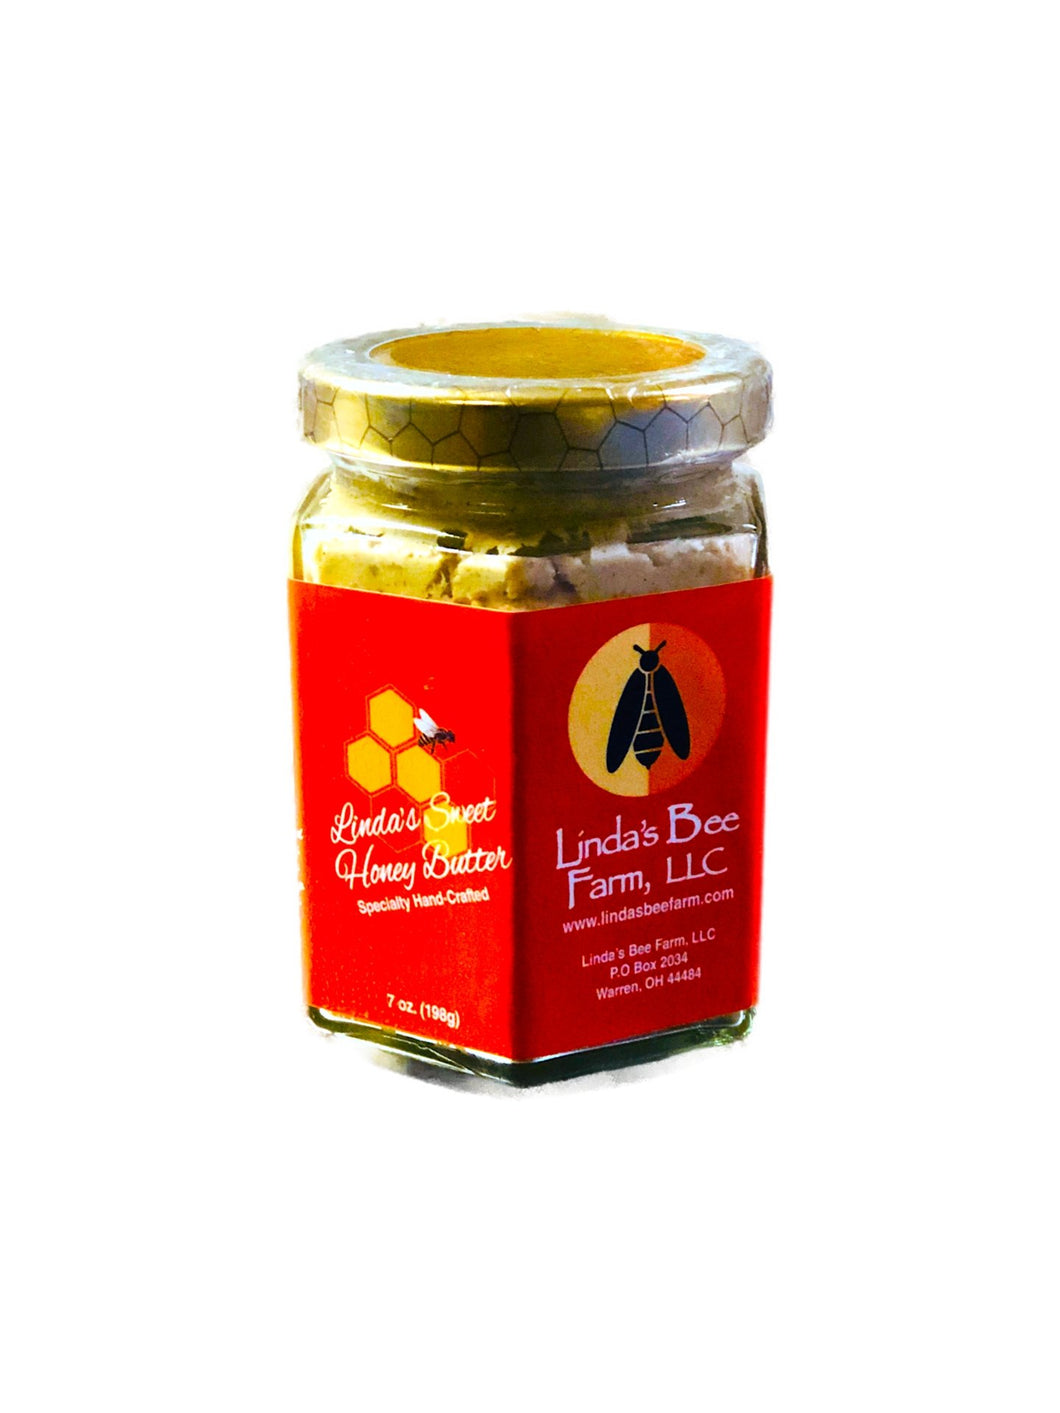 Linda's Bee Farm Shop - Linda’s Sweet Honey Butter Spread by Linda's Bee Farm Shop - Farm2Me - carro-6364826 - 745557310348 -